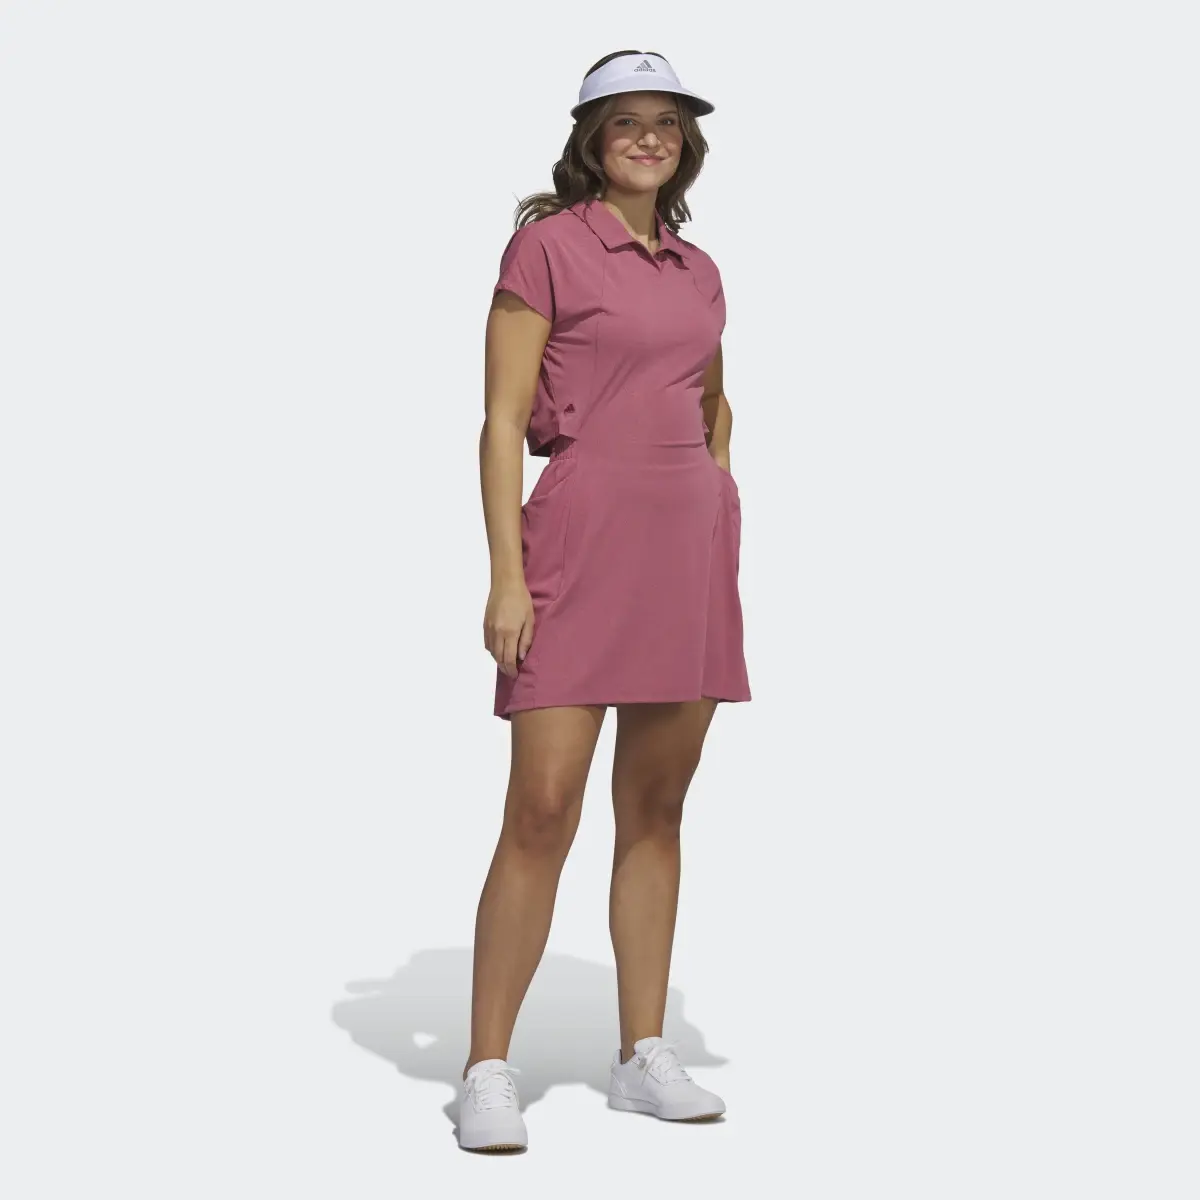 Adidas Go-To Golf Dress. 2